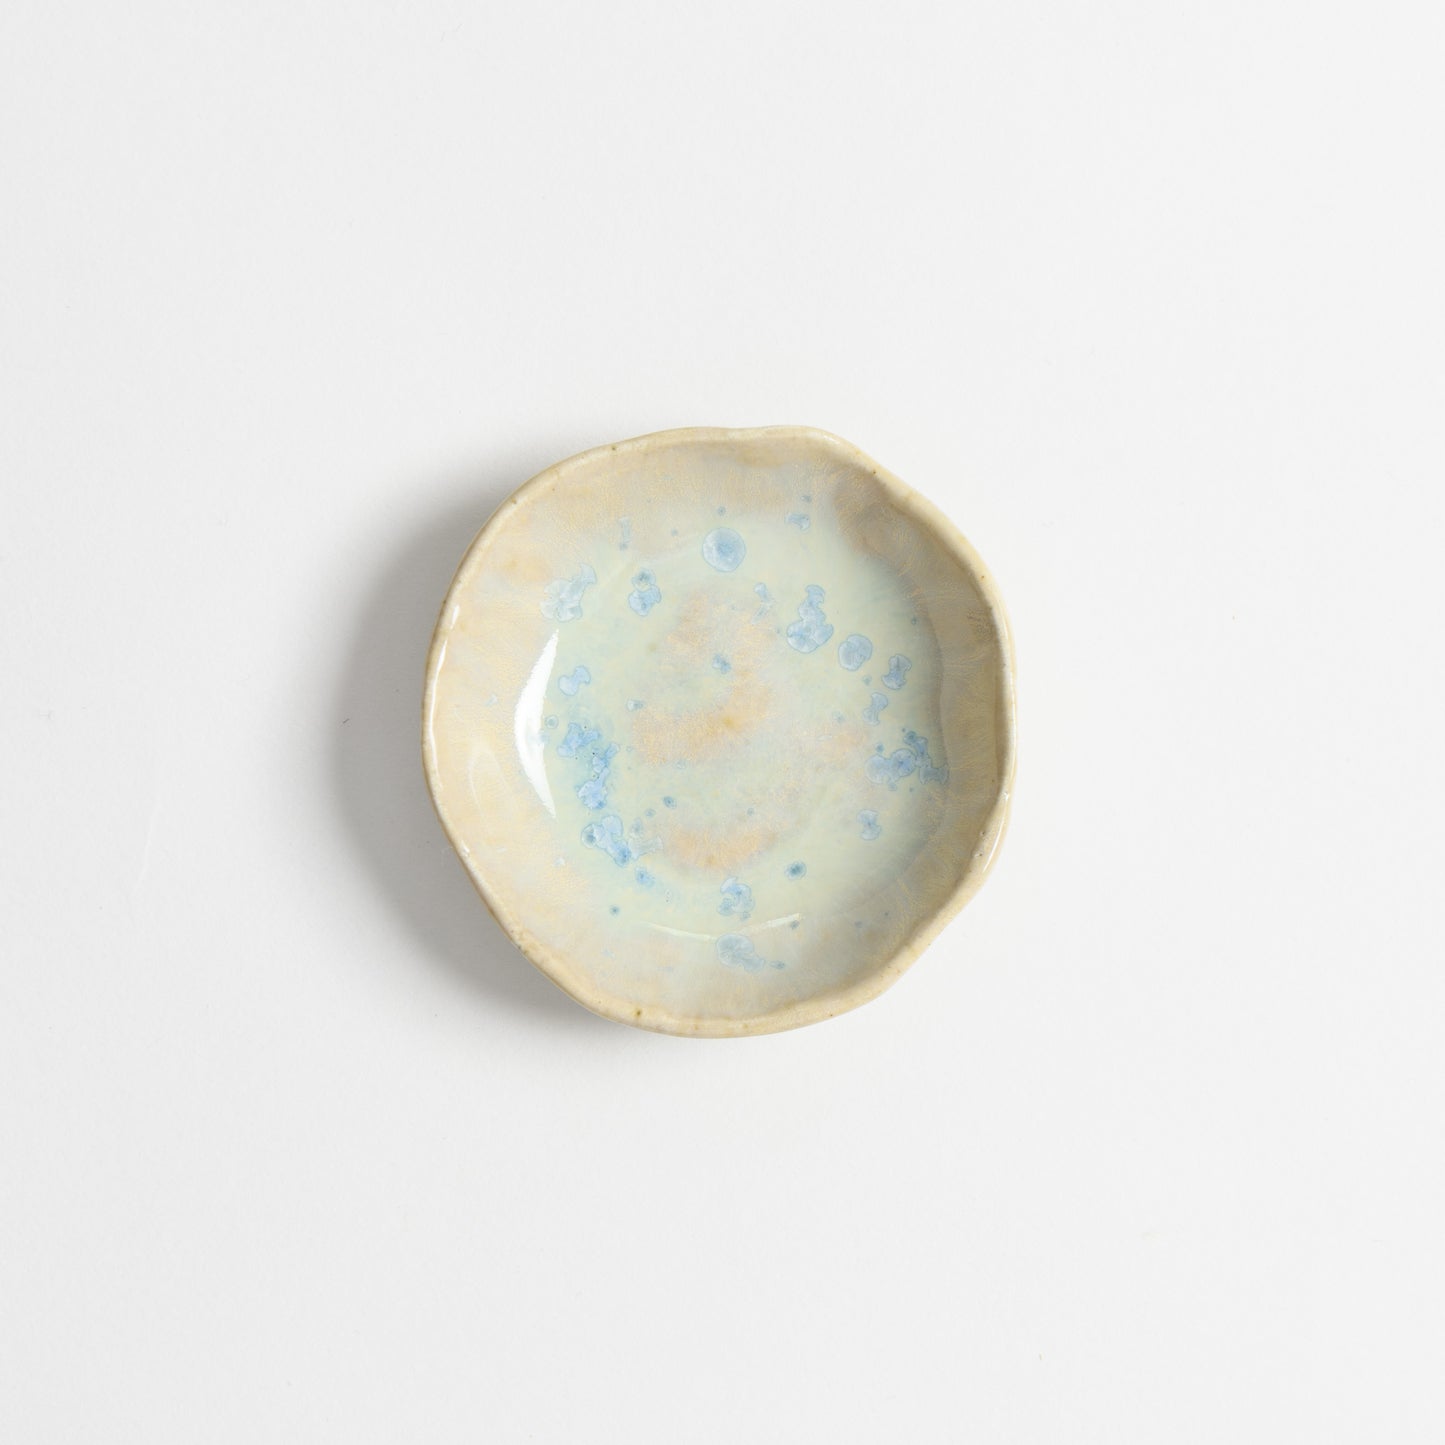 Ring Dish - Mermaid Opal